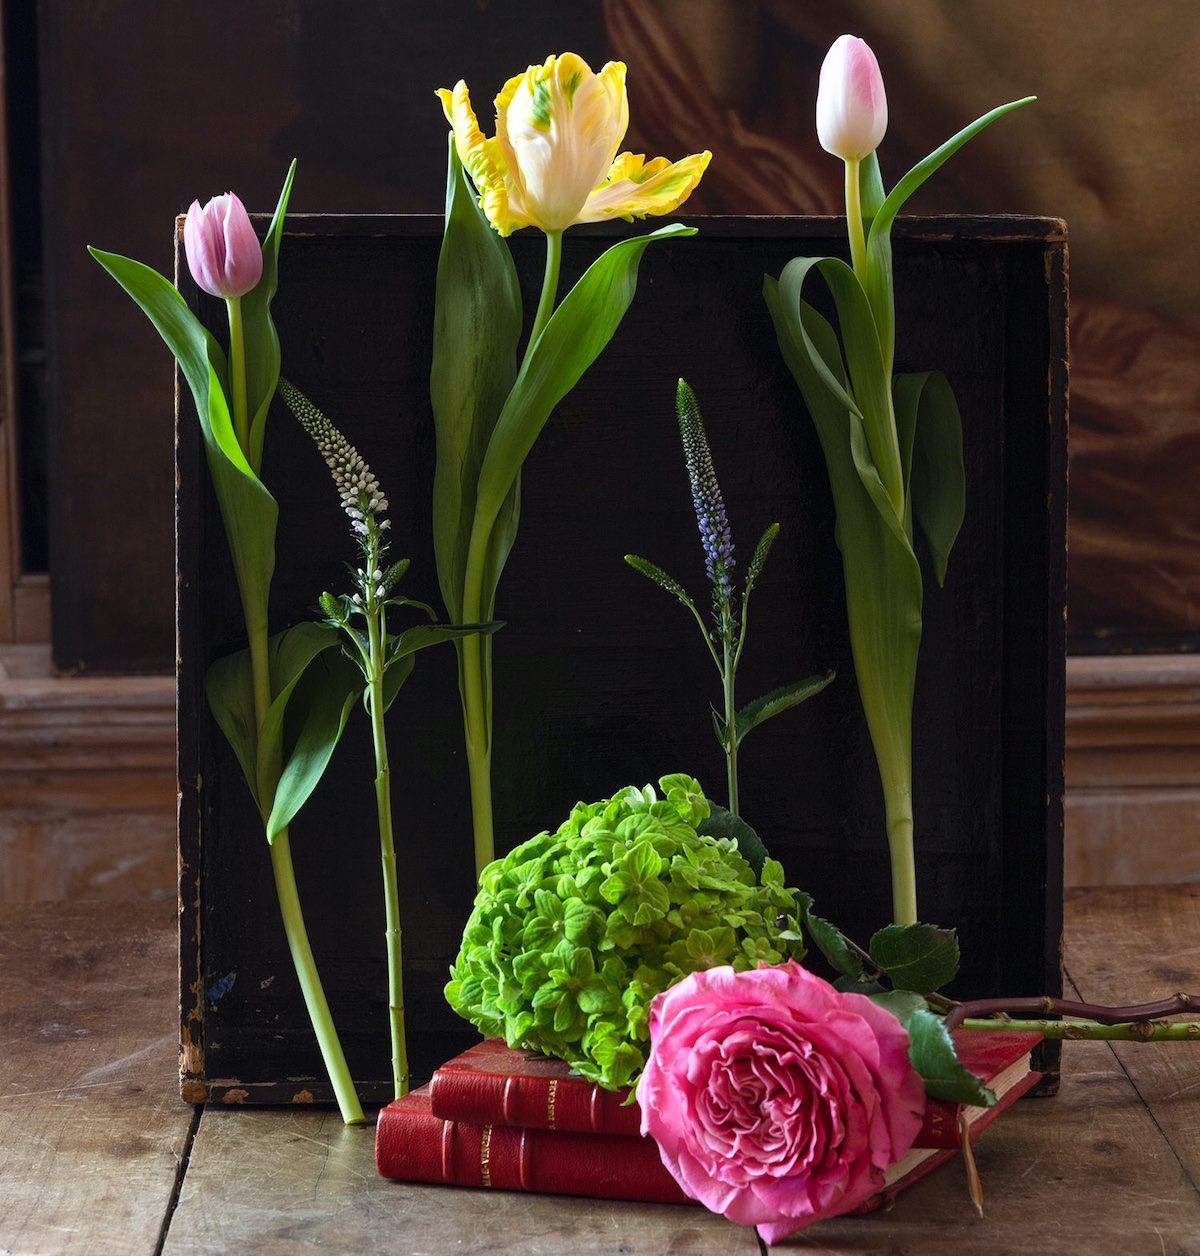 “Hulk” hydrangea David Austin “Ashley” roses Pink field tulips Yellow parrot tulips Lysimachus, blue and white